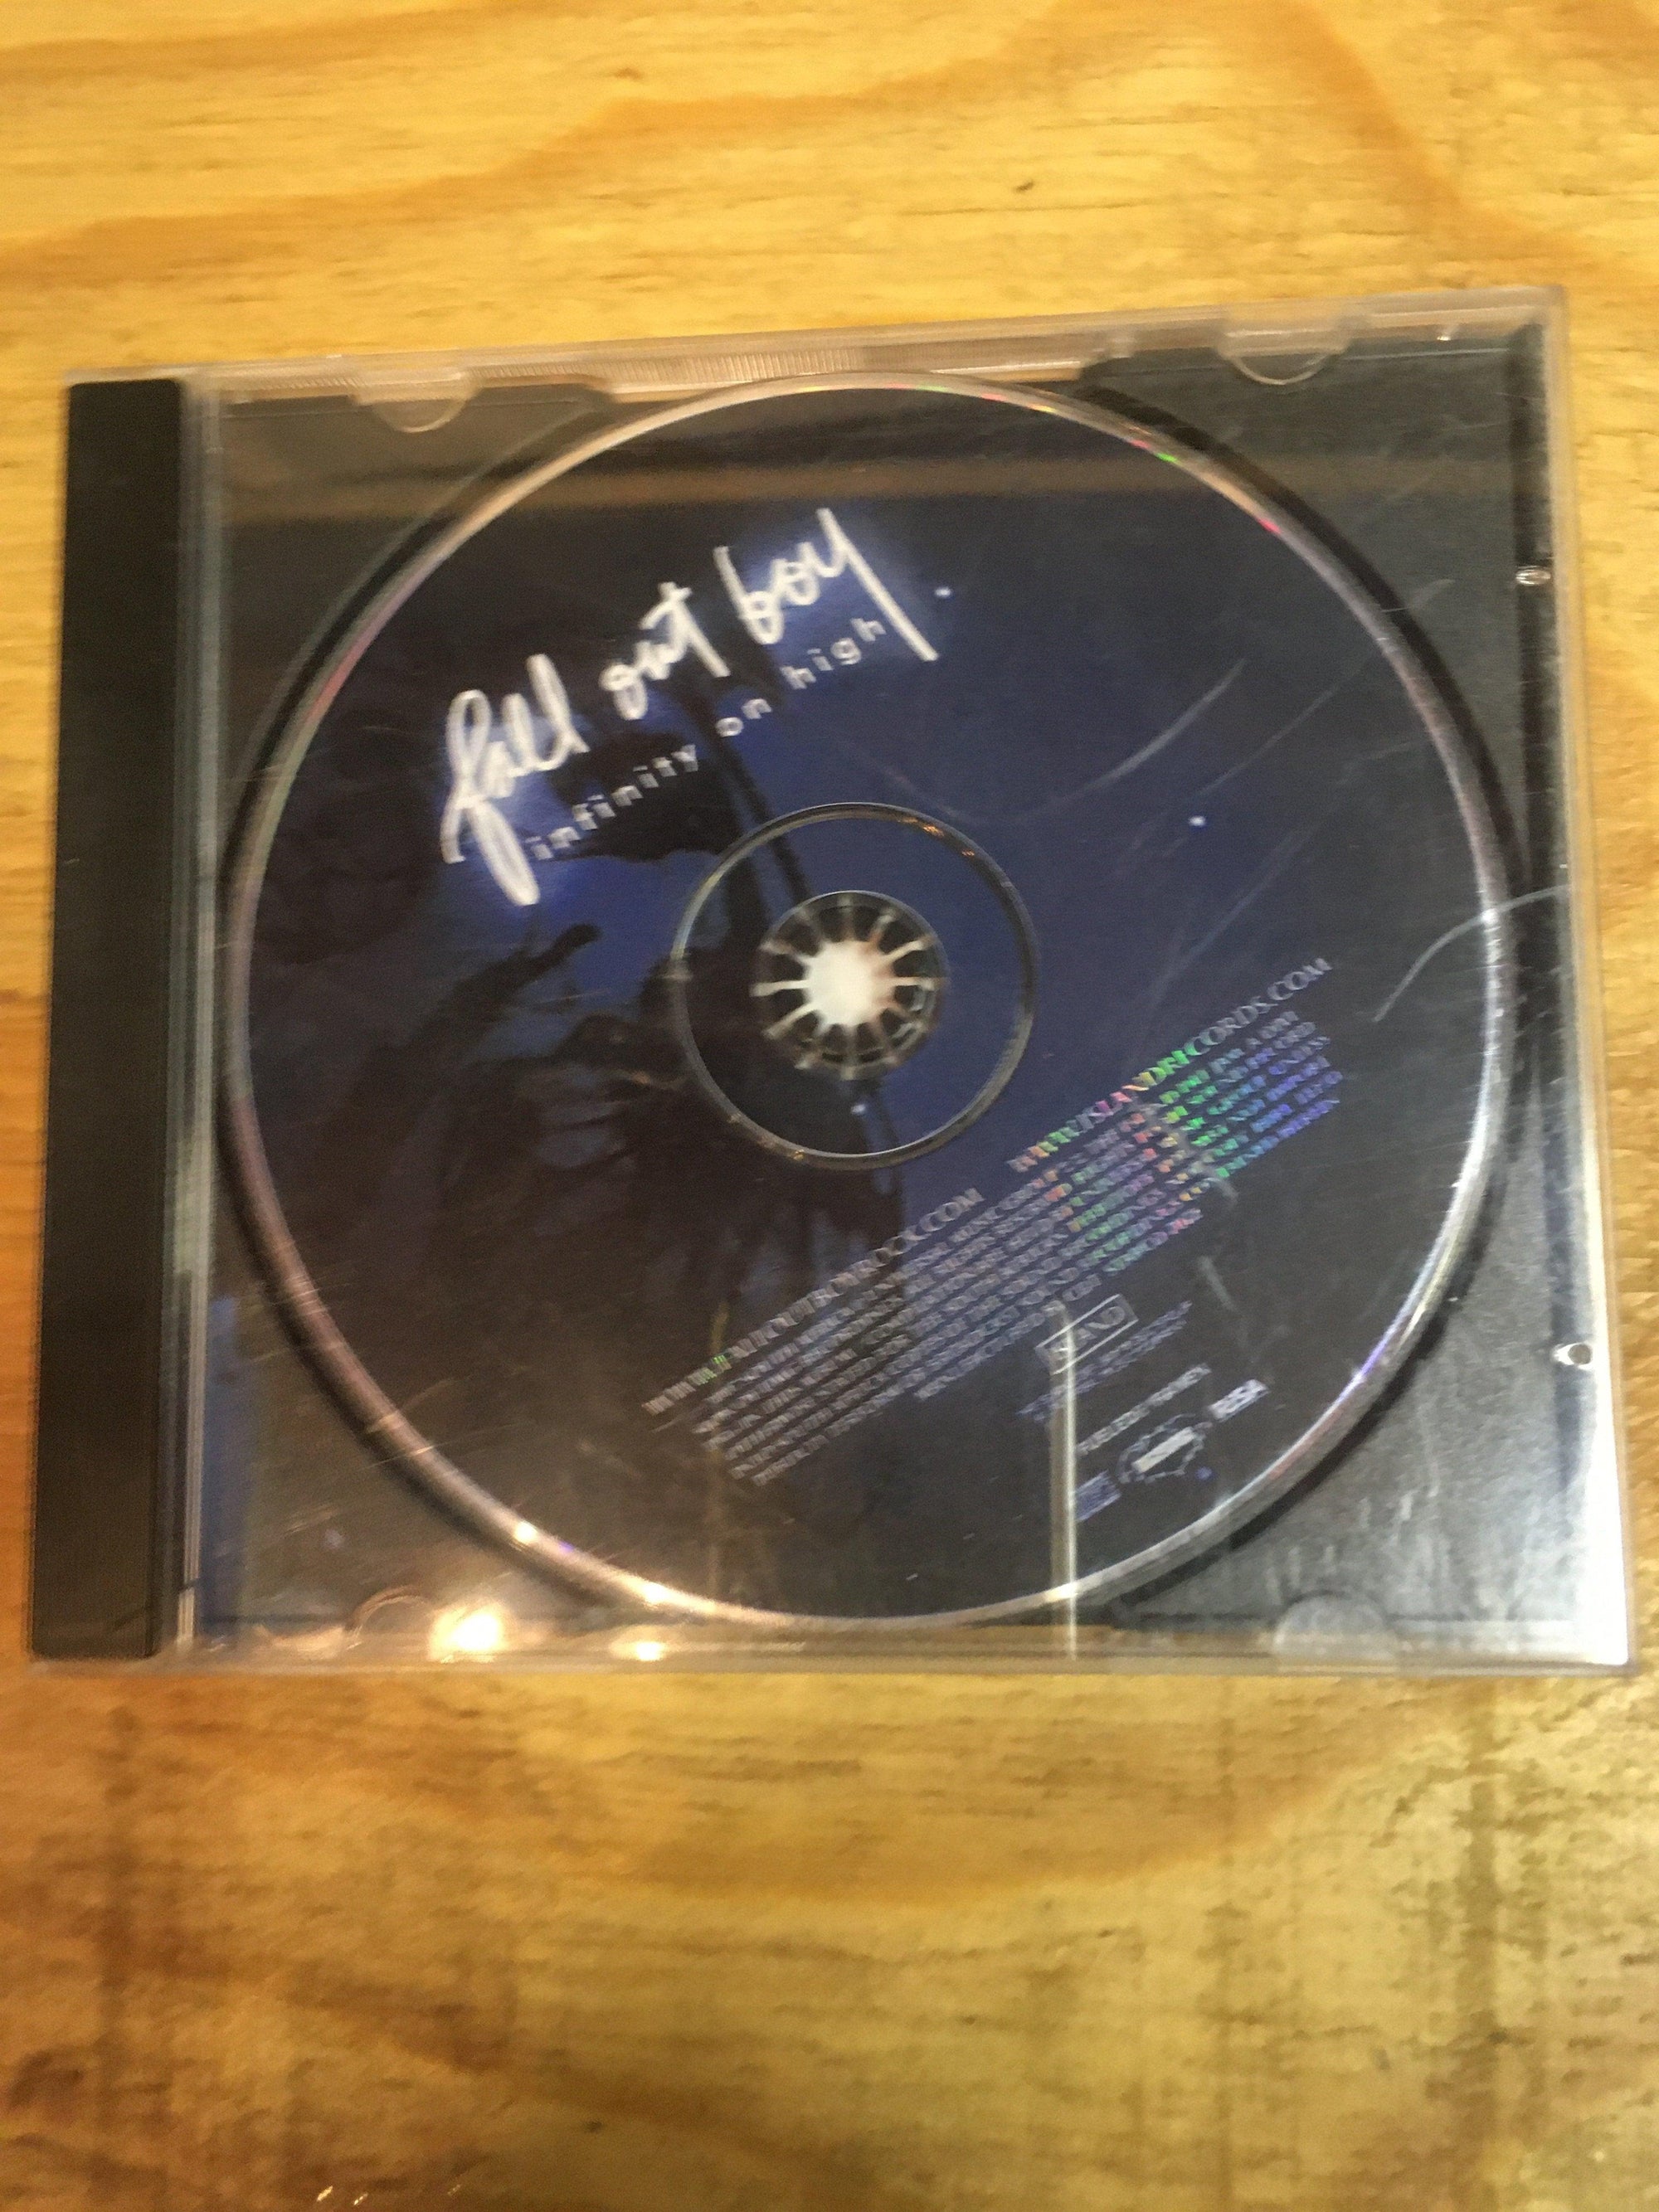 Fall Out Boy - CD - 2ndhandwarehouse.com